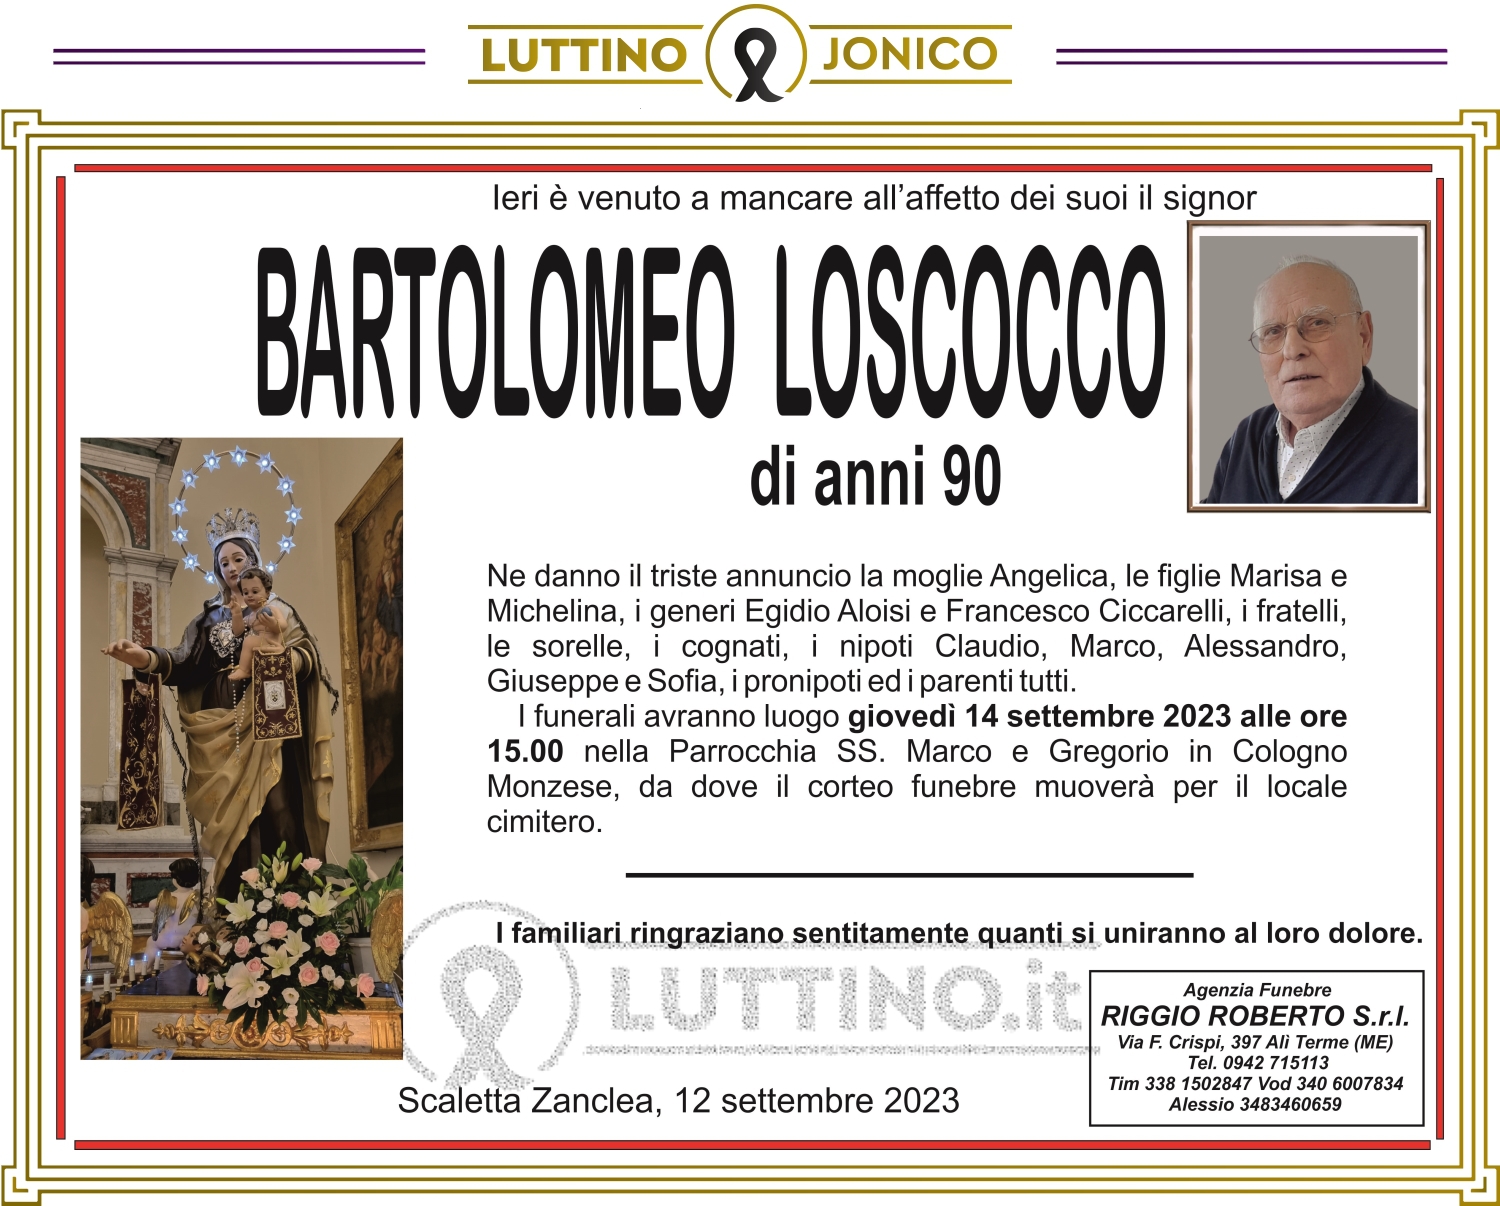 Bartolomeo Loscocco